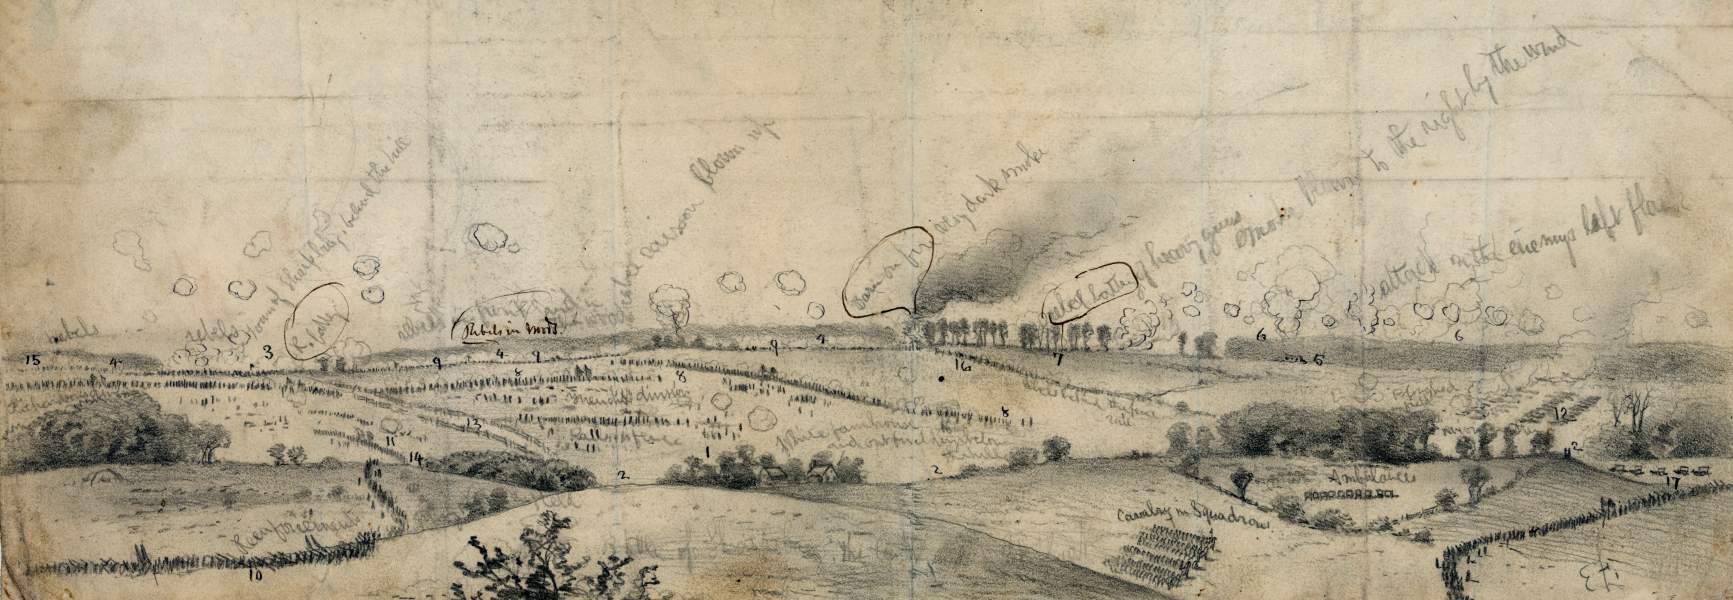 Battlefield of Antietam, September 17, 1862, artist's impression, zoomable image